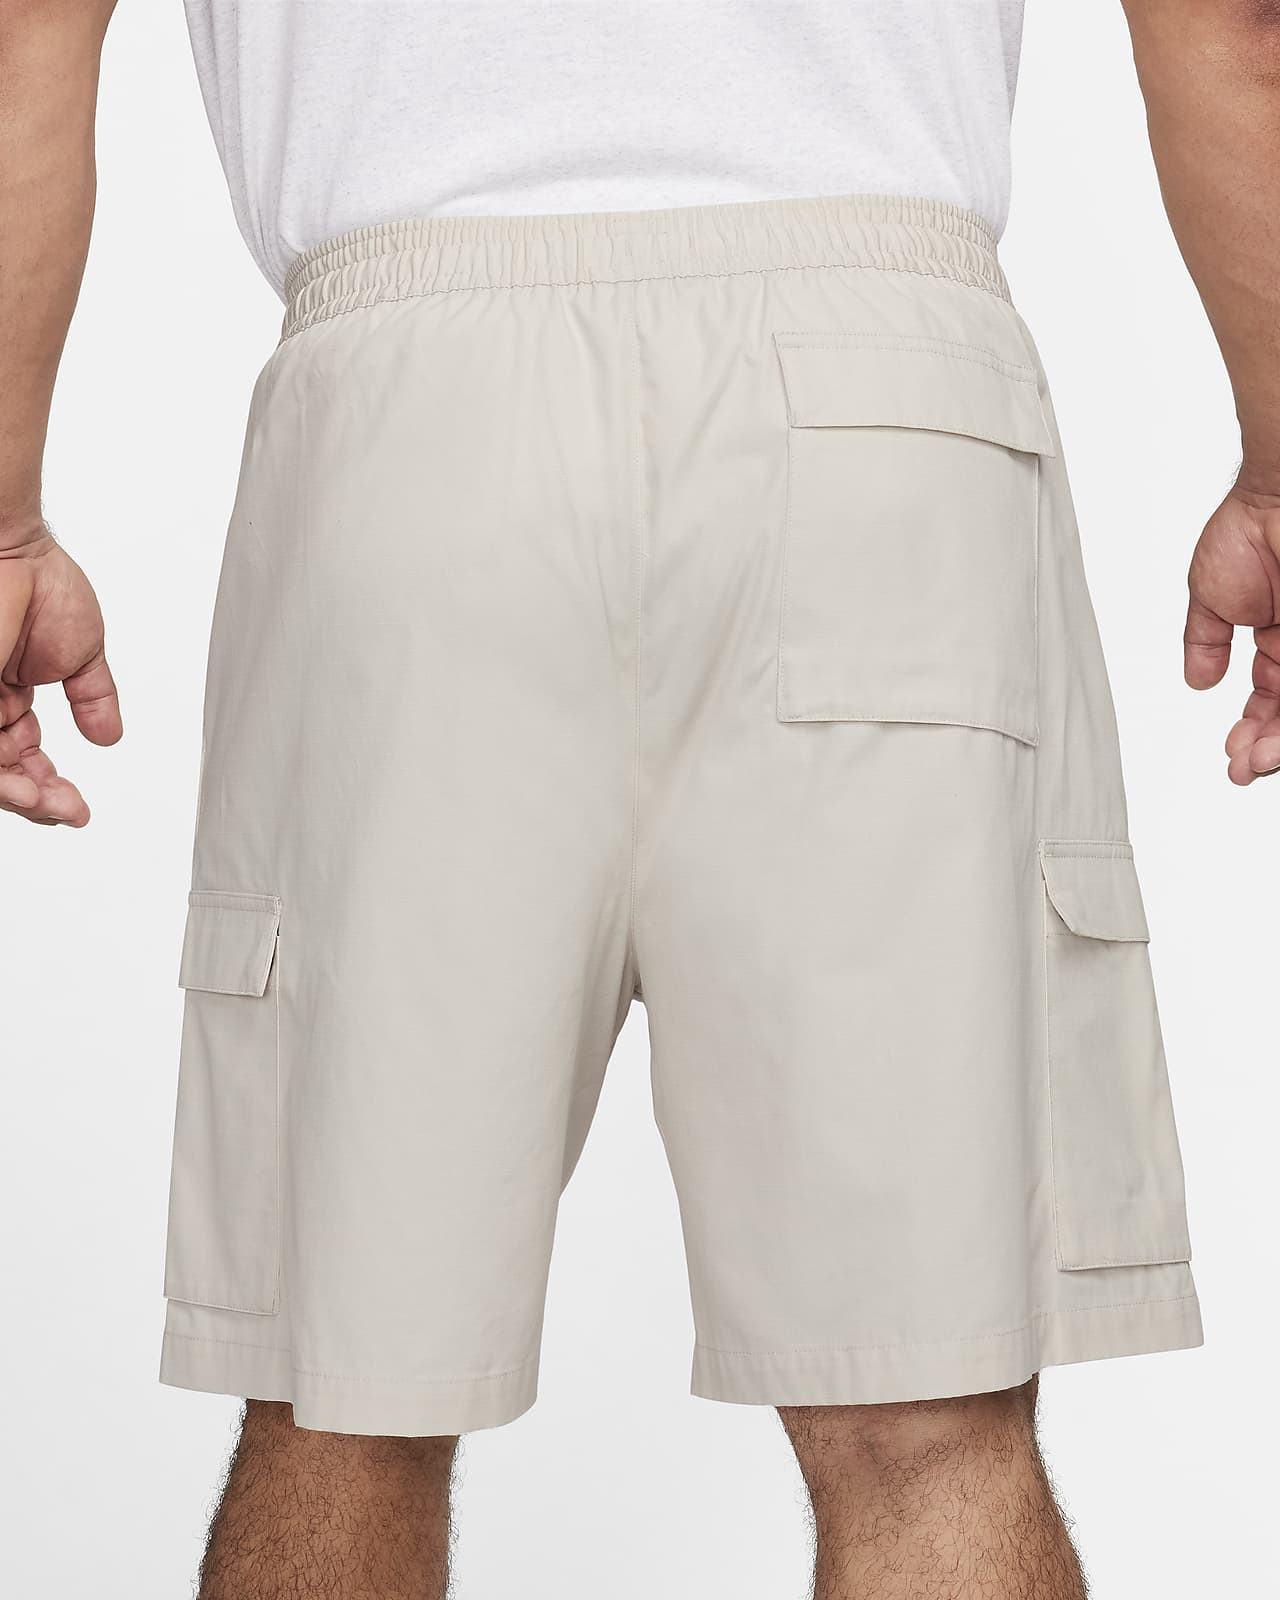 OFF-WHITE x Nike 002 Woven Shorts Beige